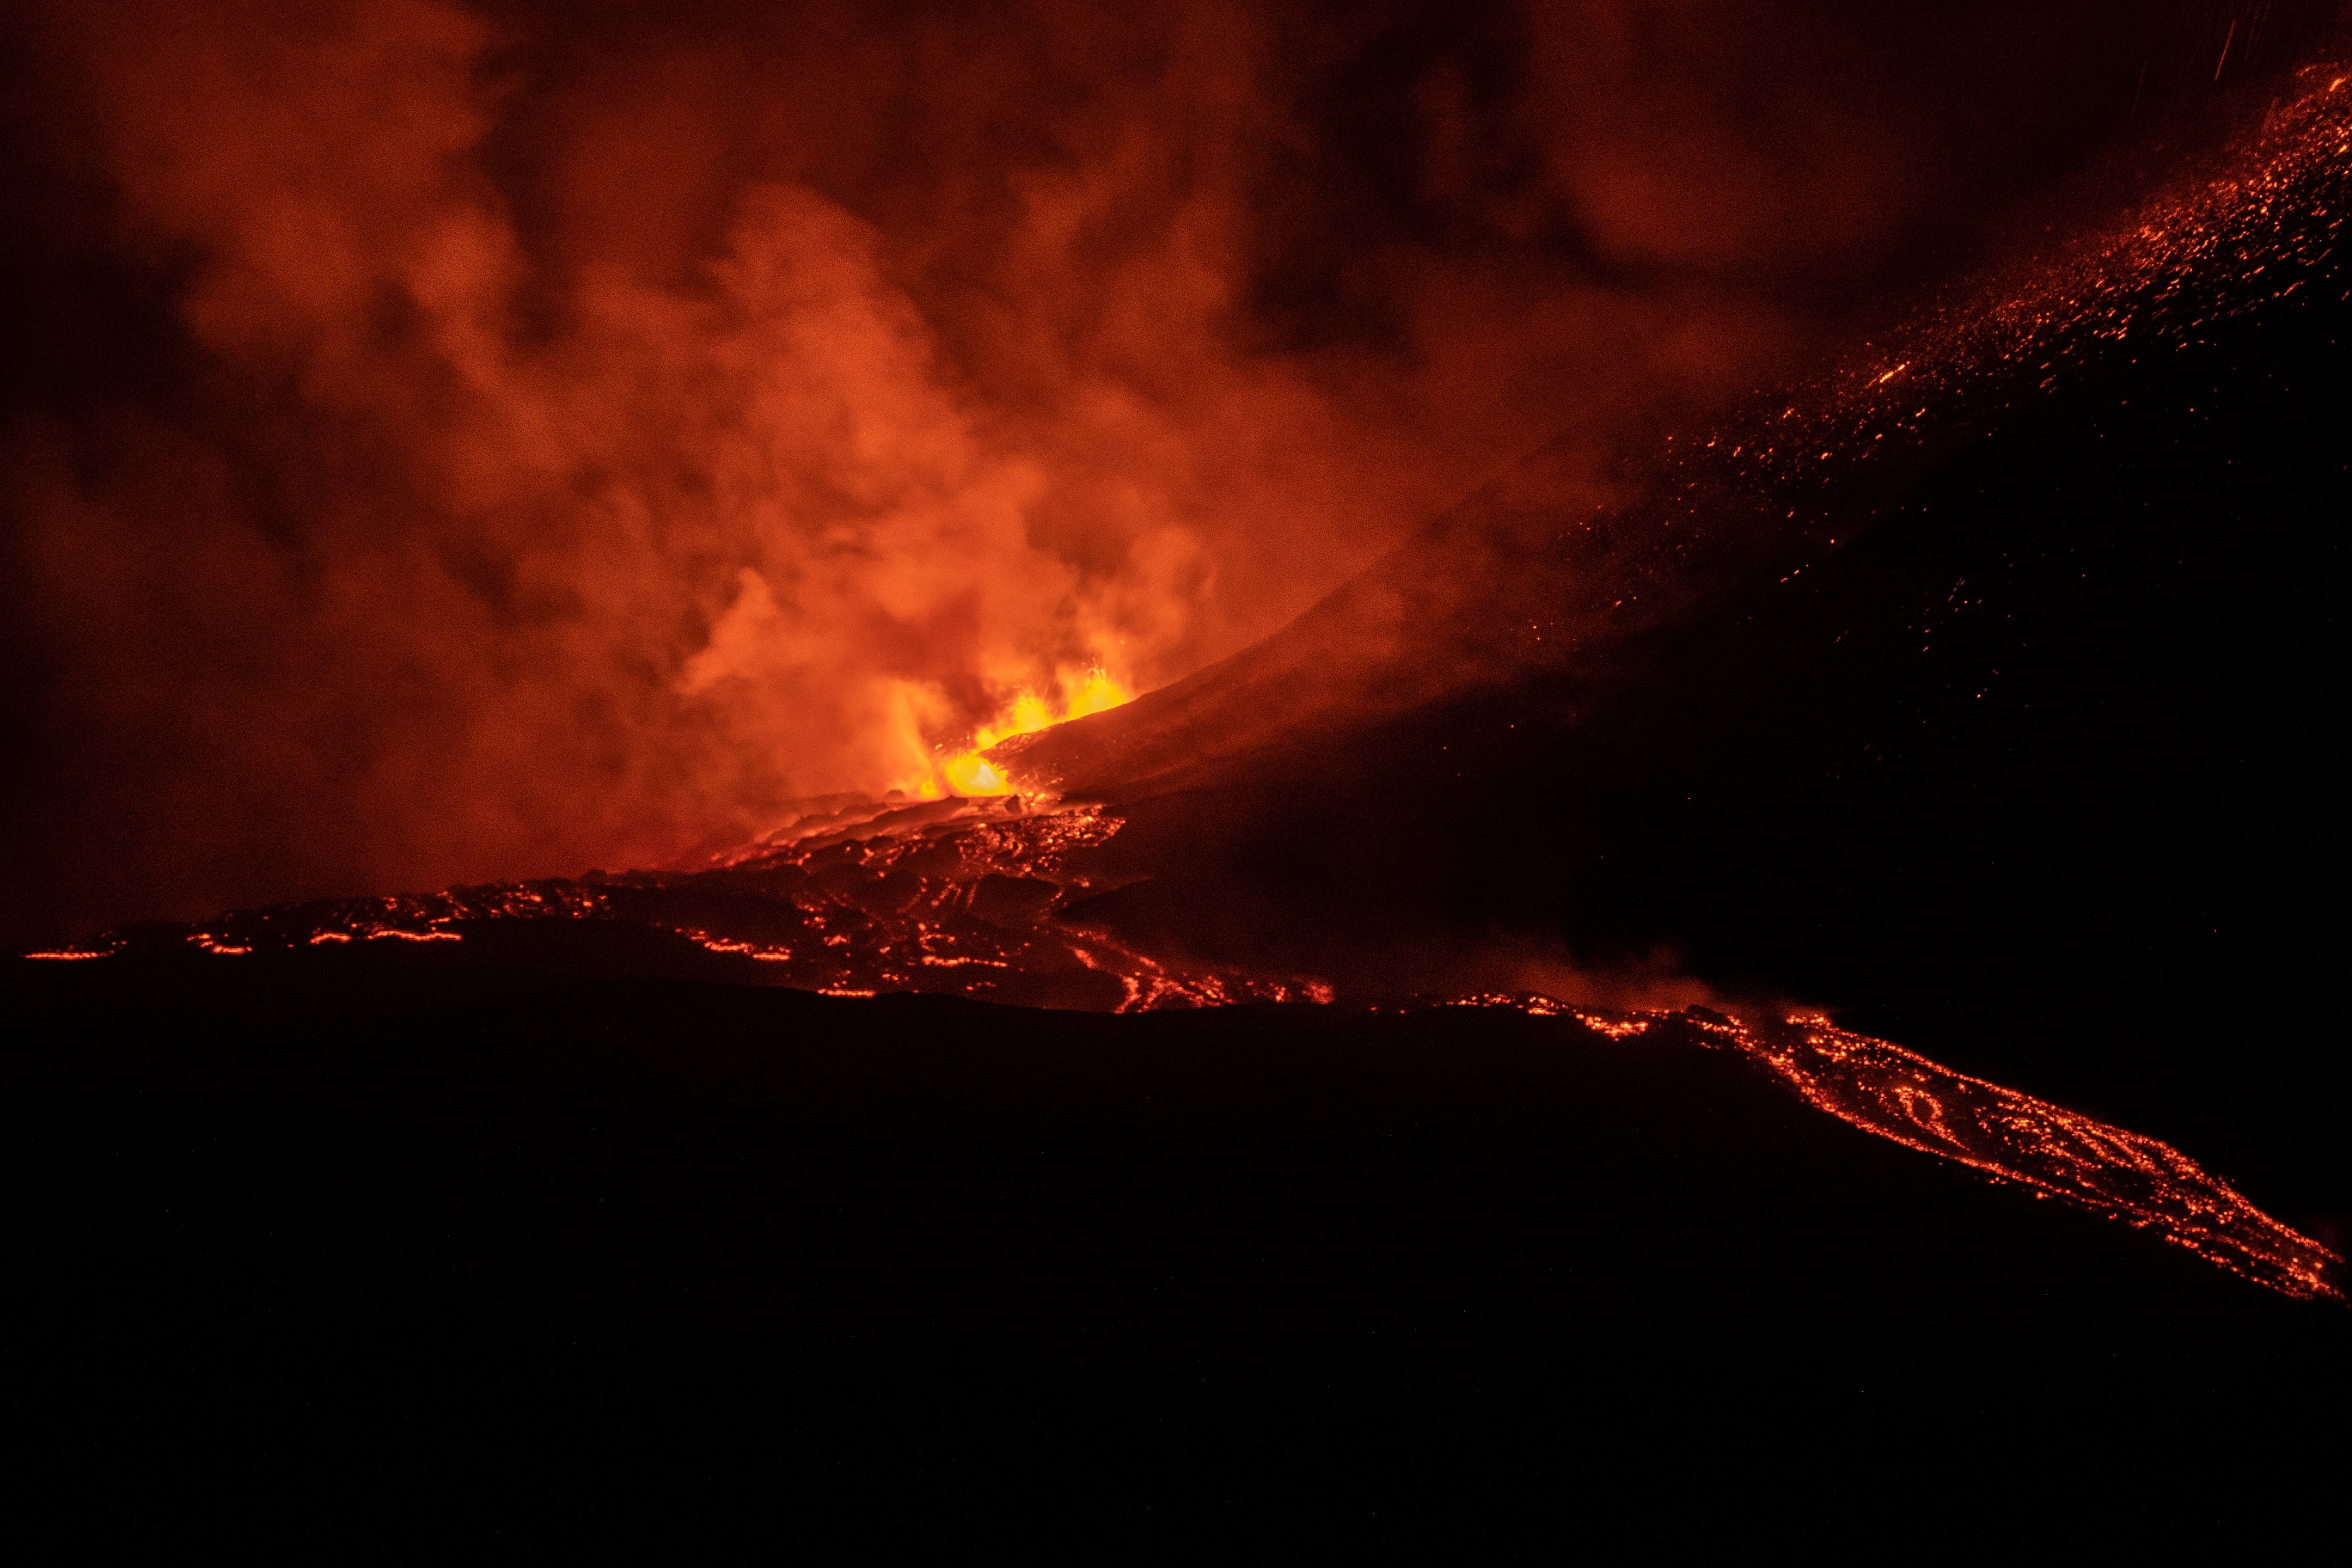 Eruption of the Etna volcano in Sicily